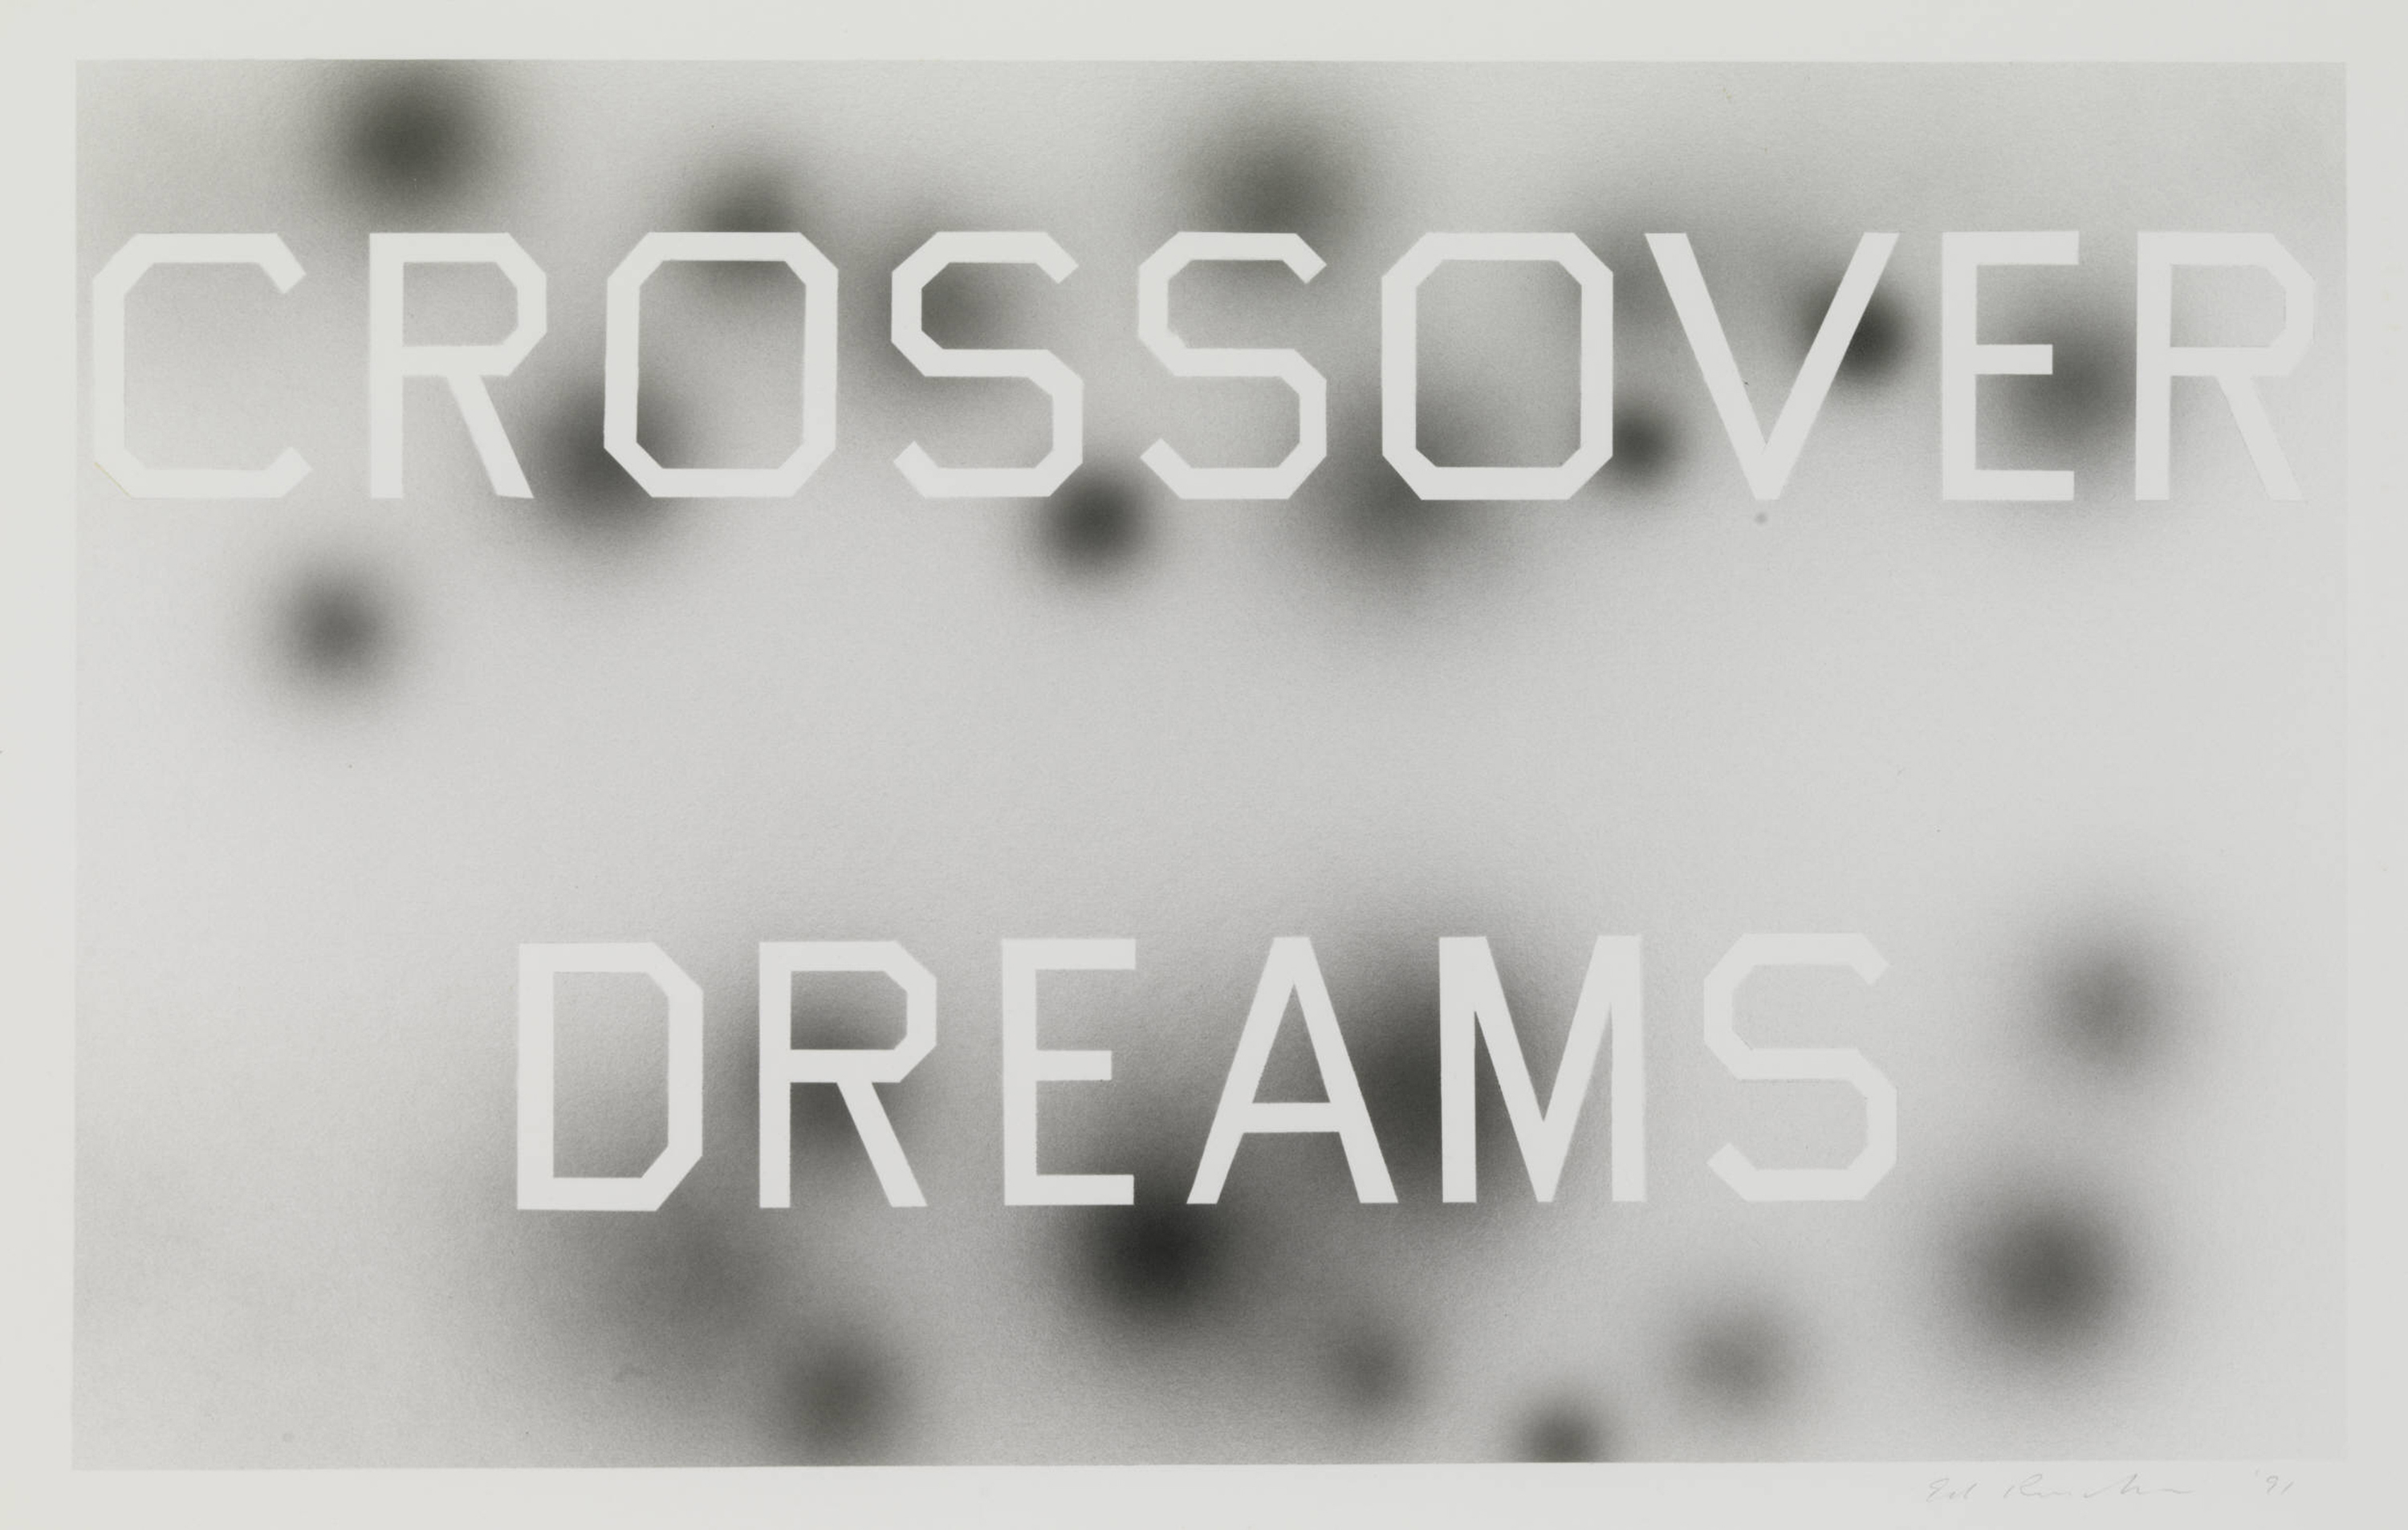 crossover dreams, ed ruscha 1991